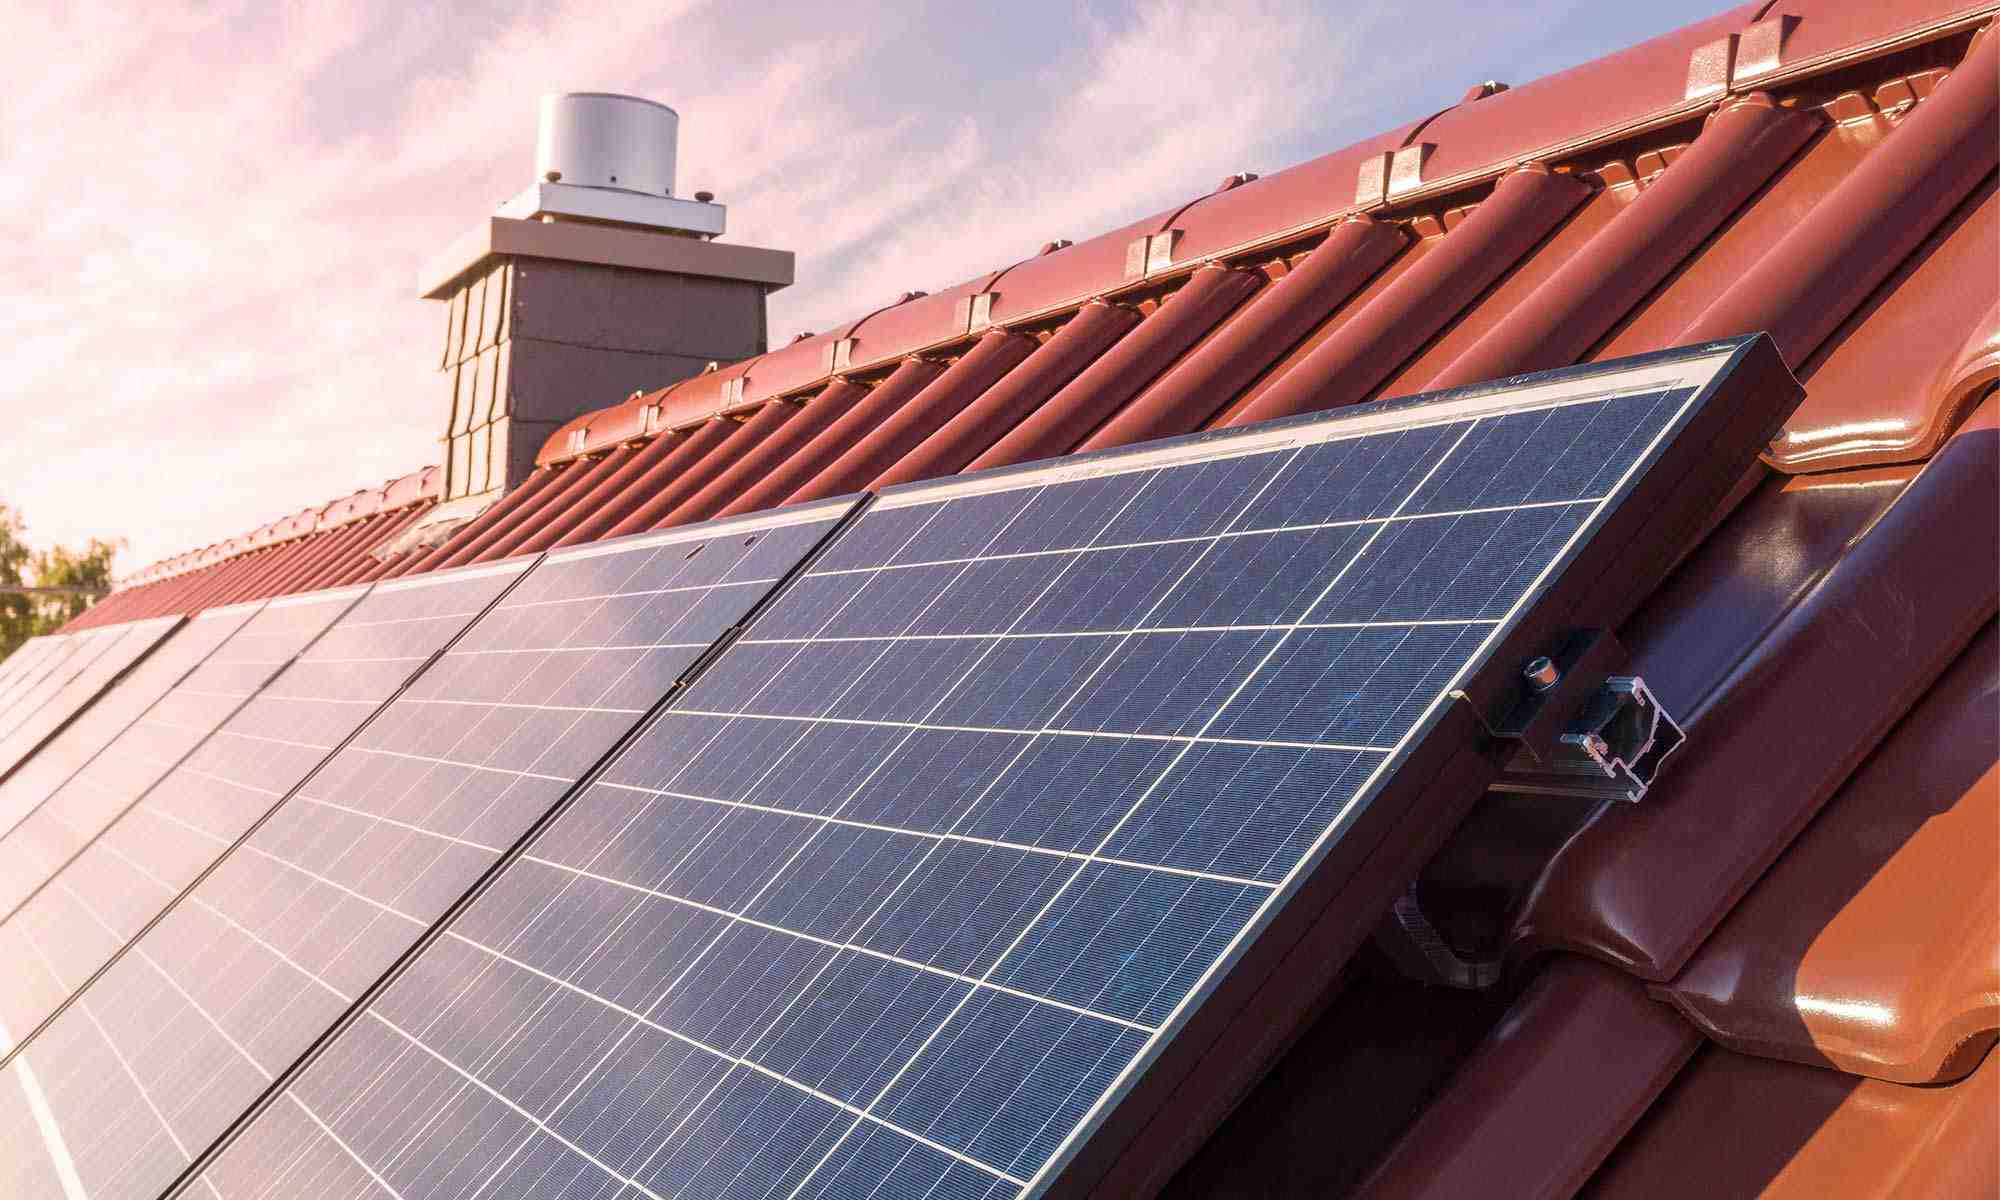 Is sunrun the largest solar company?